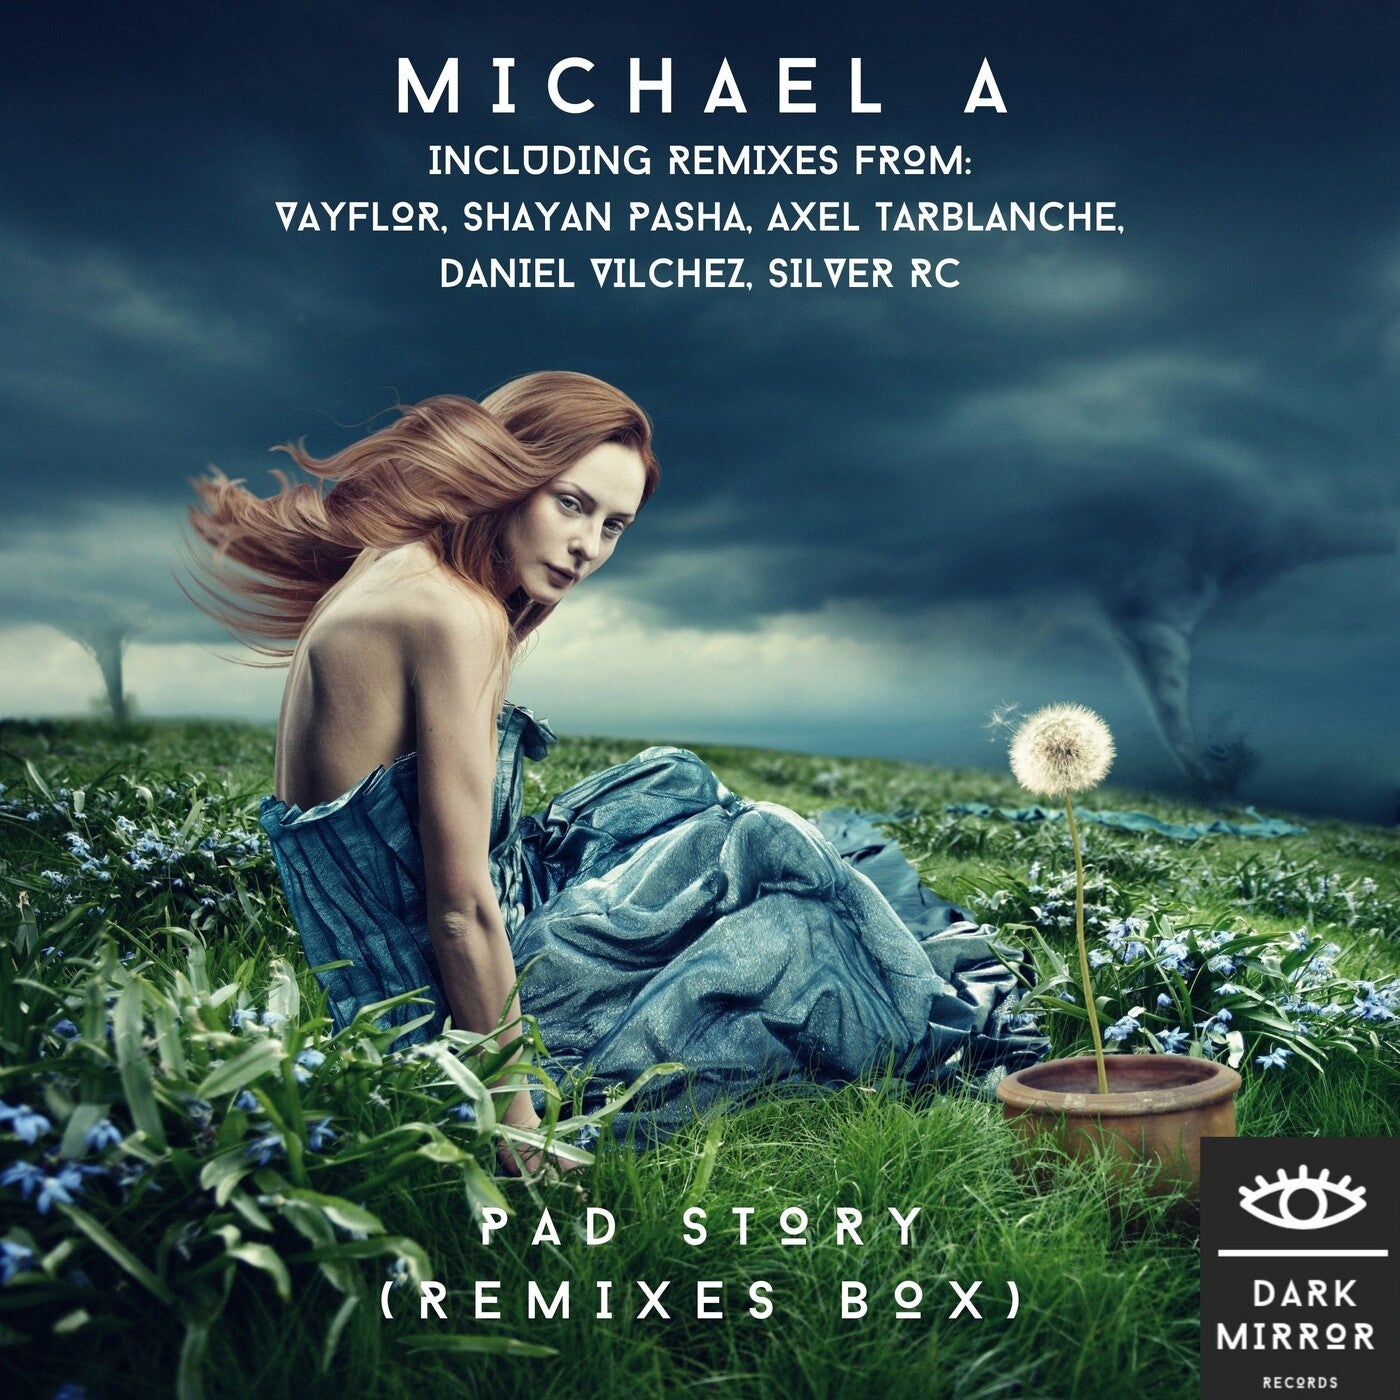 Michael A - Pad Story (Remixes Box) [DMR063]